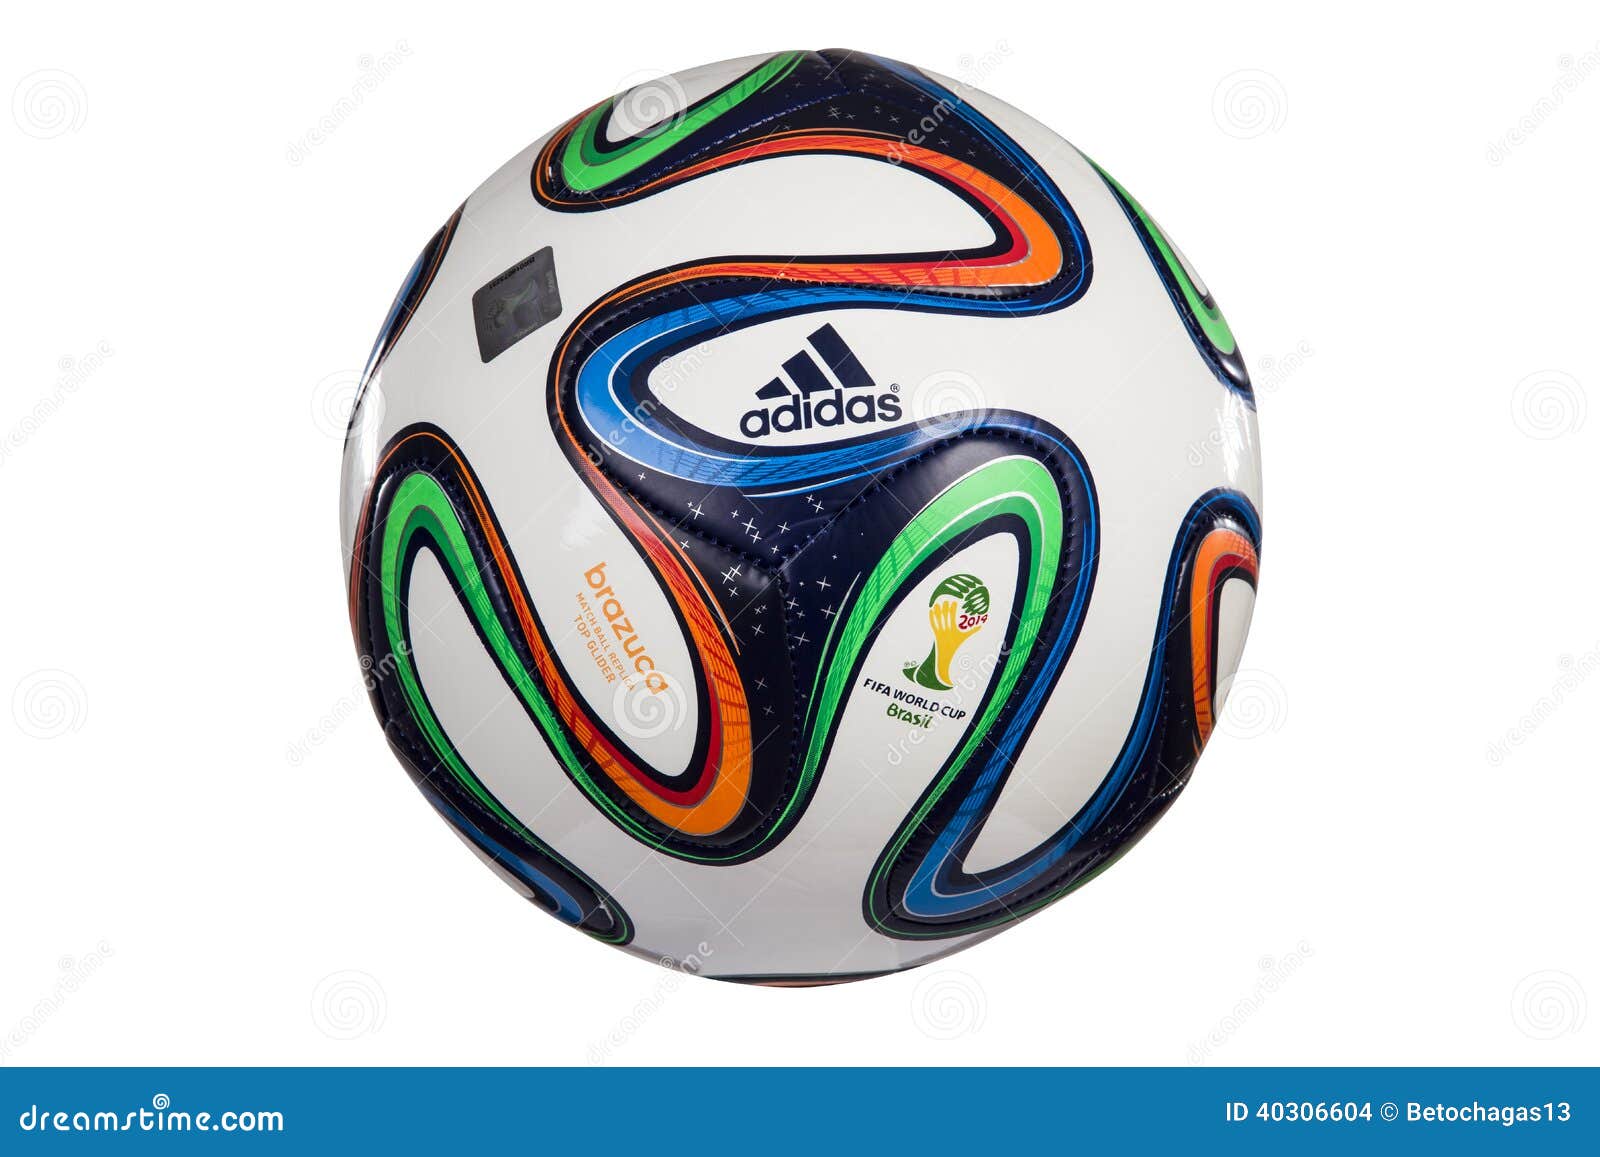 Adidas Brazuca World Cup 2014 Football Editorial Stock Image